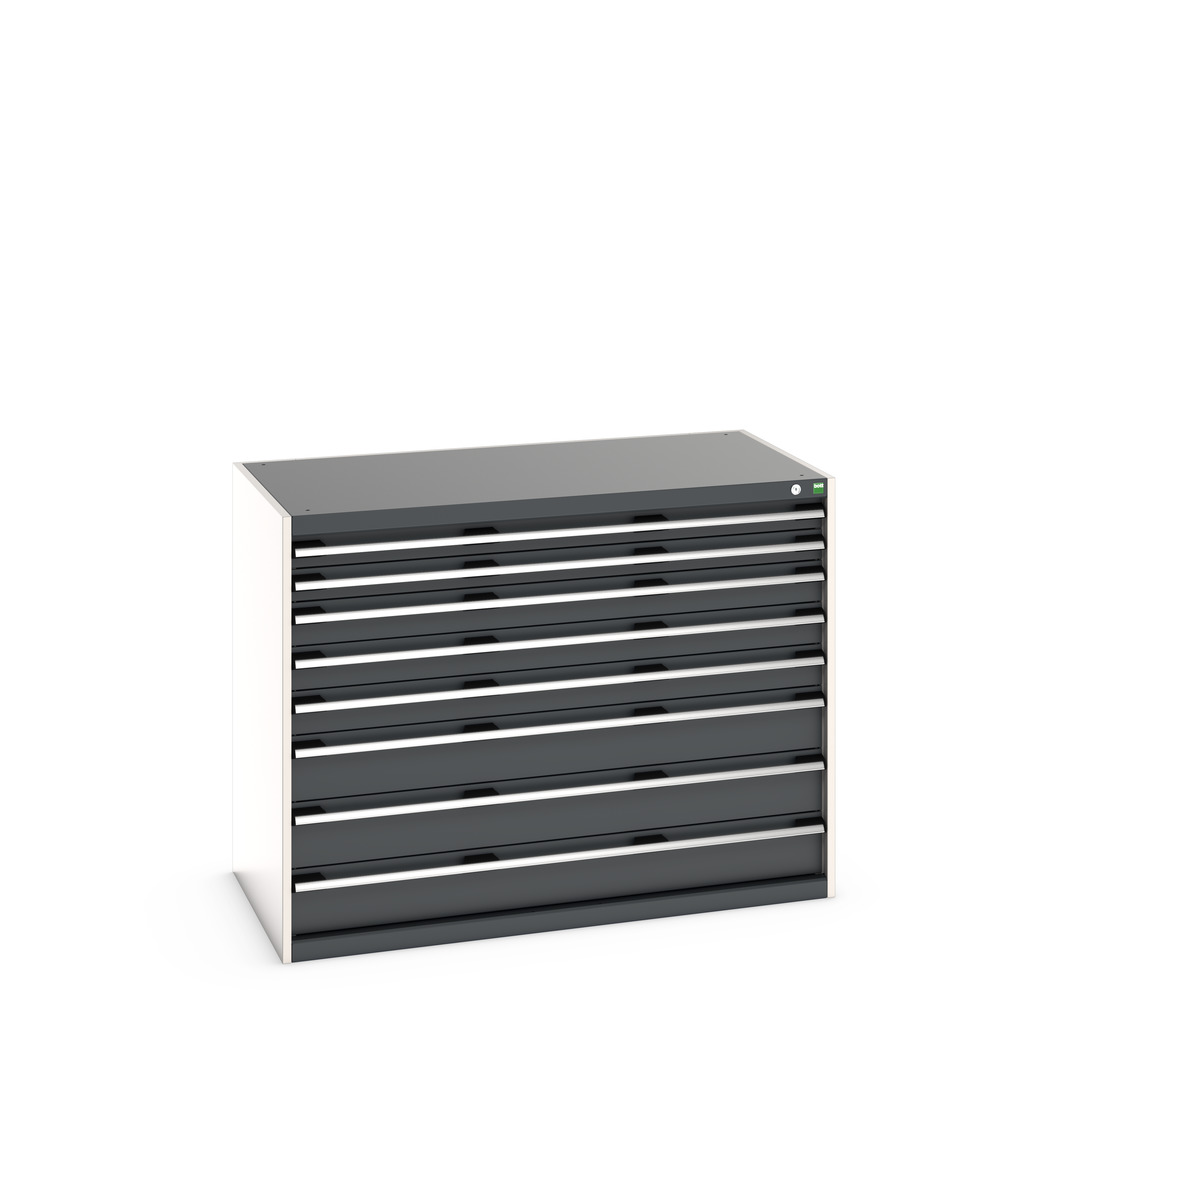 40030020. - cubio drawer cabinet